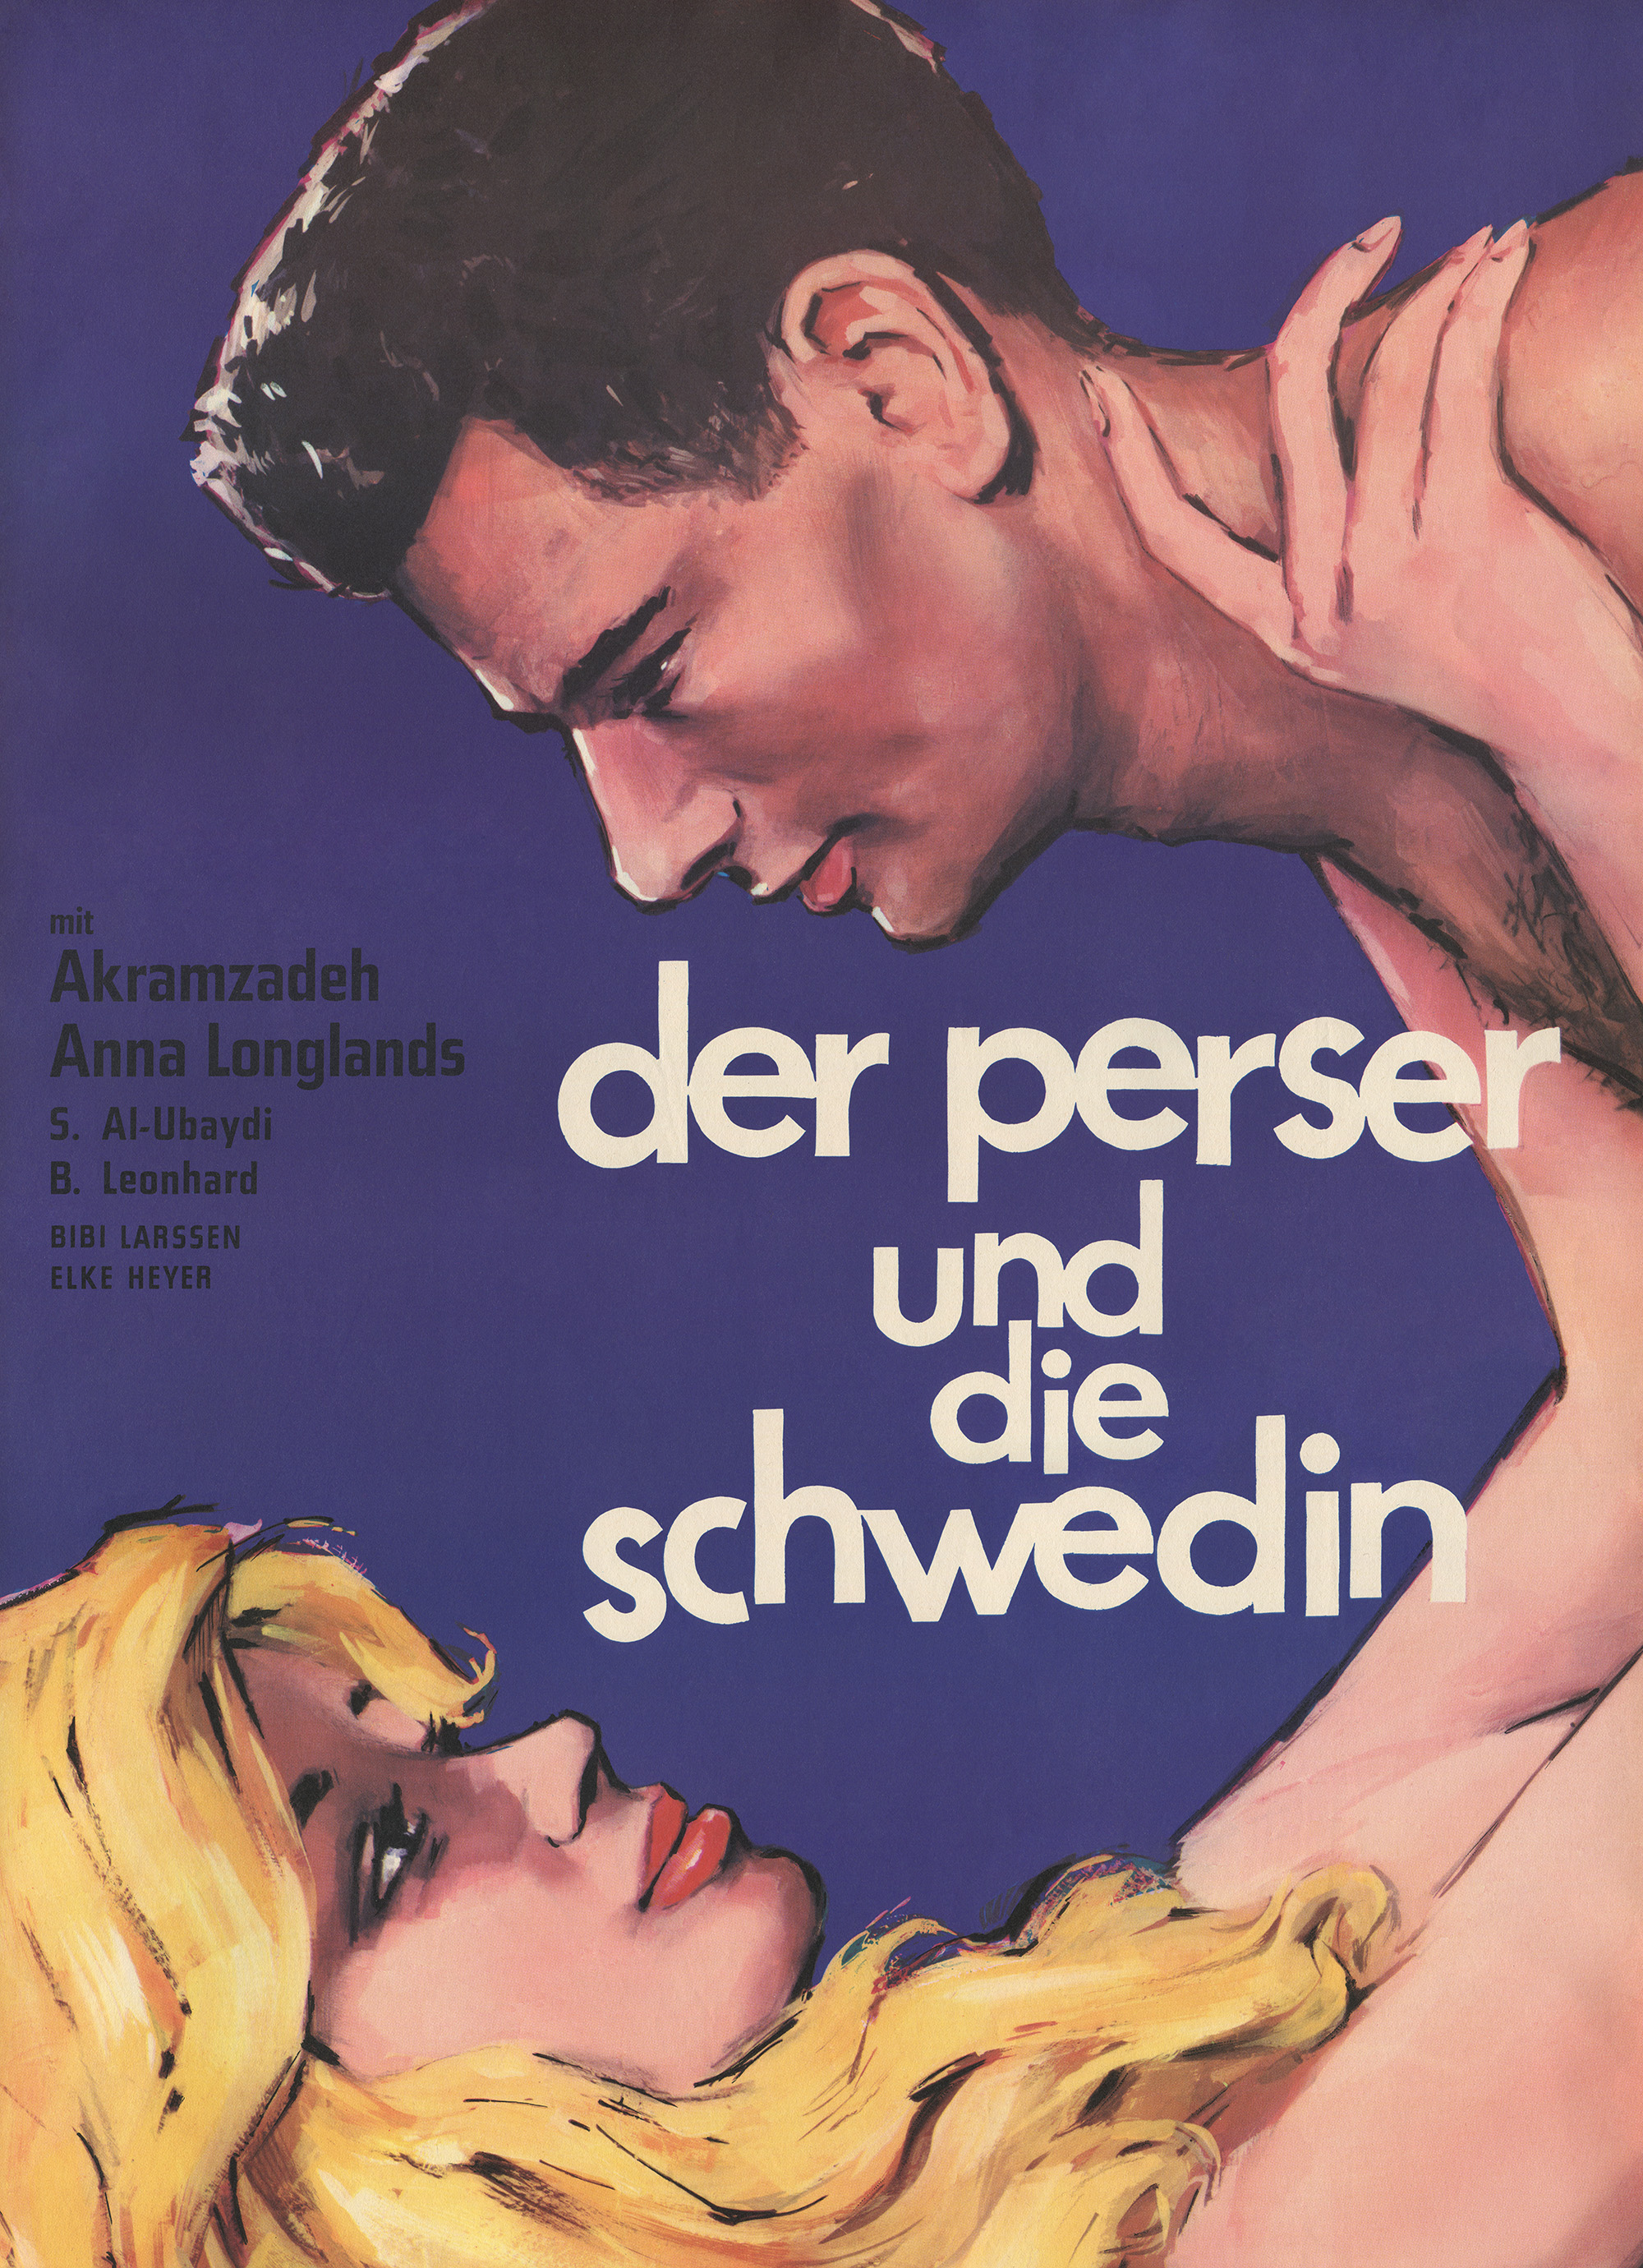 Jeunesse perdue (1961) starring Akramzadeh on DVD on DVD